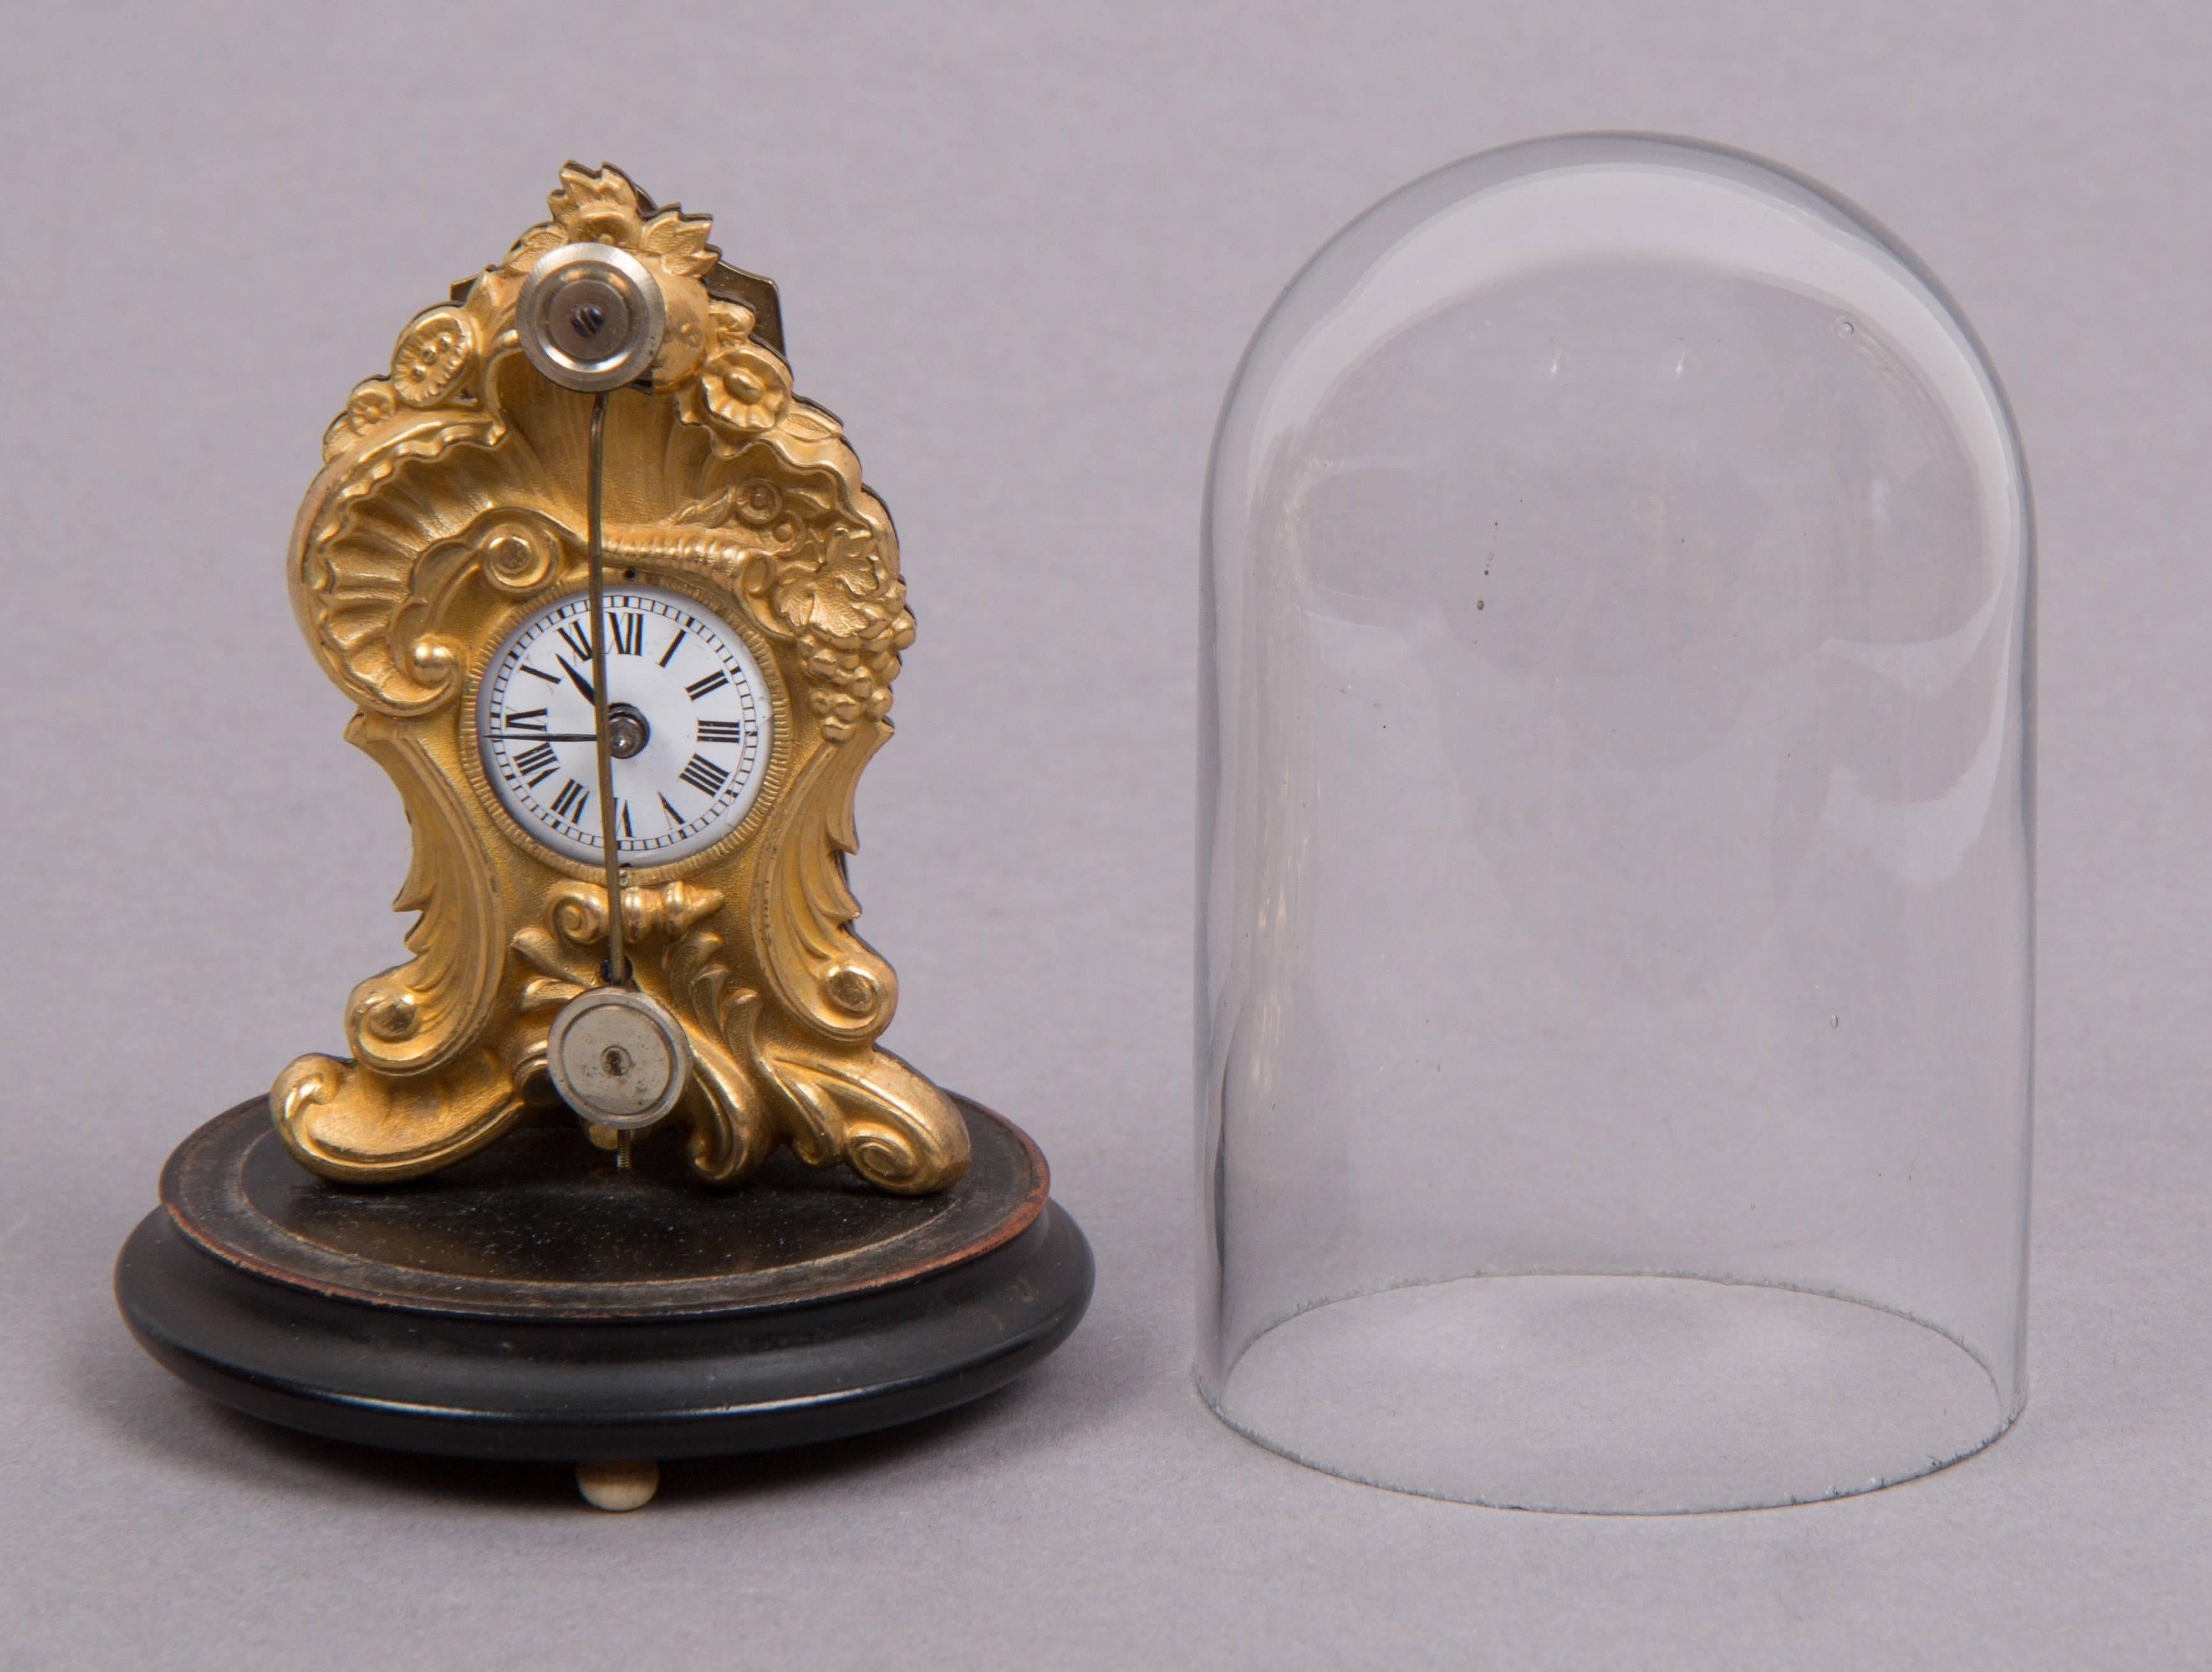 Height: 9.7 cm (with bell jar), diameter base: 6.5 cm.
Fire gilt brass case, bell jar, enbonised wooden base, enamel dial, hook escapement.